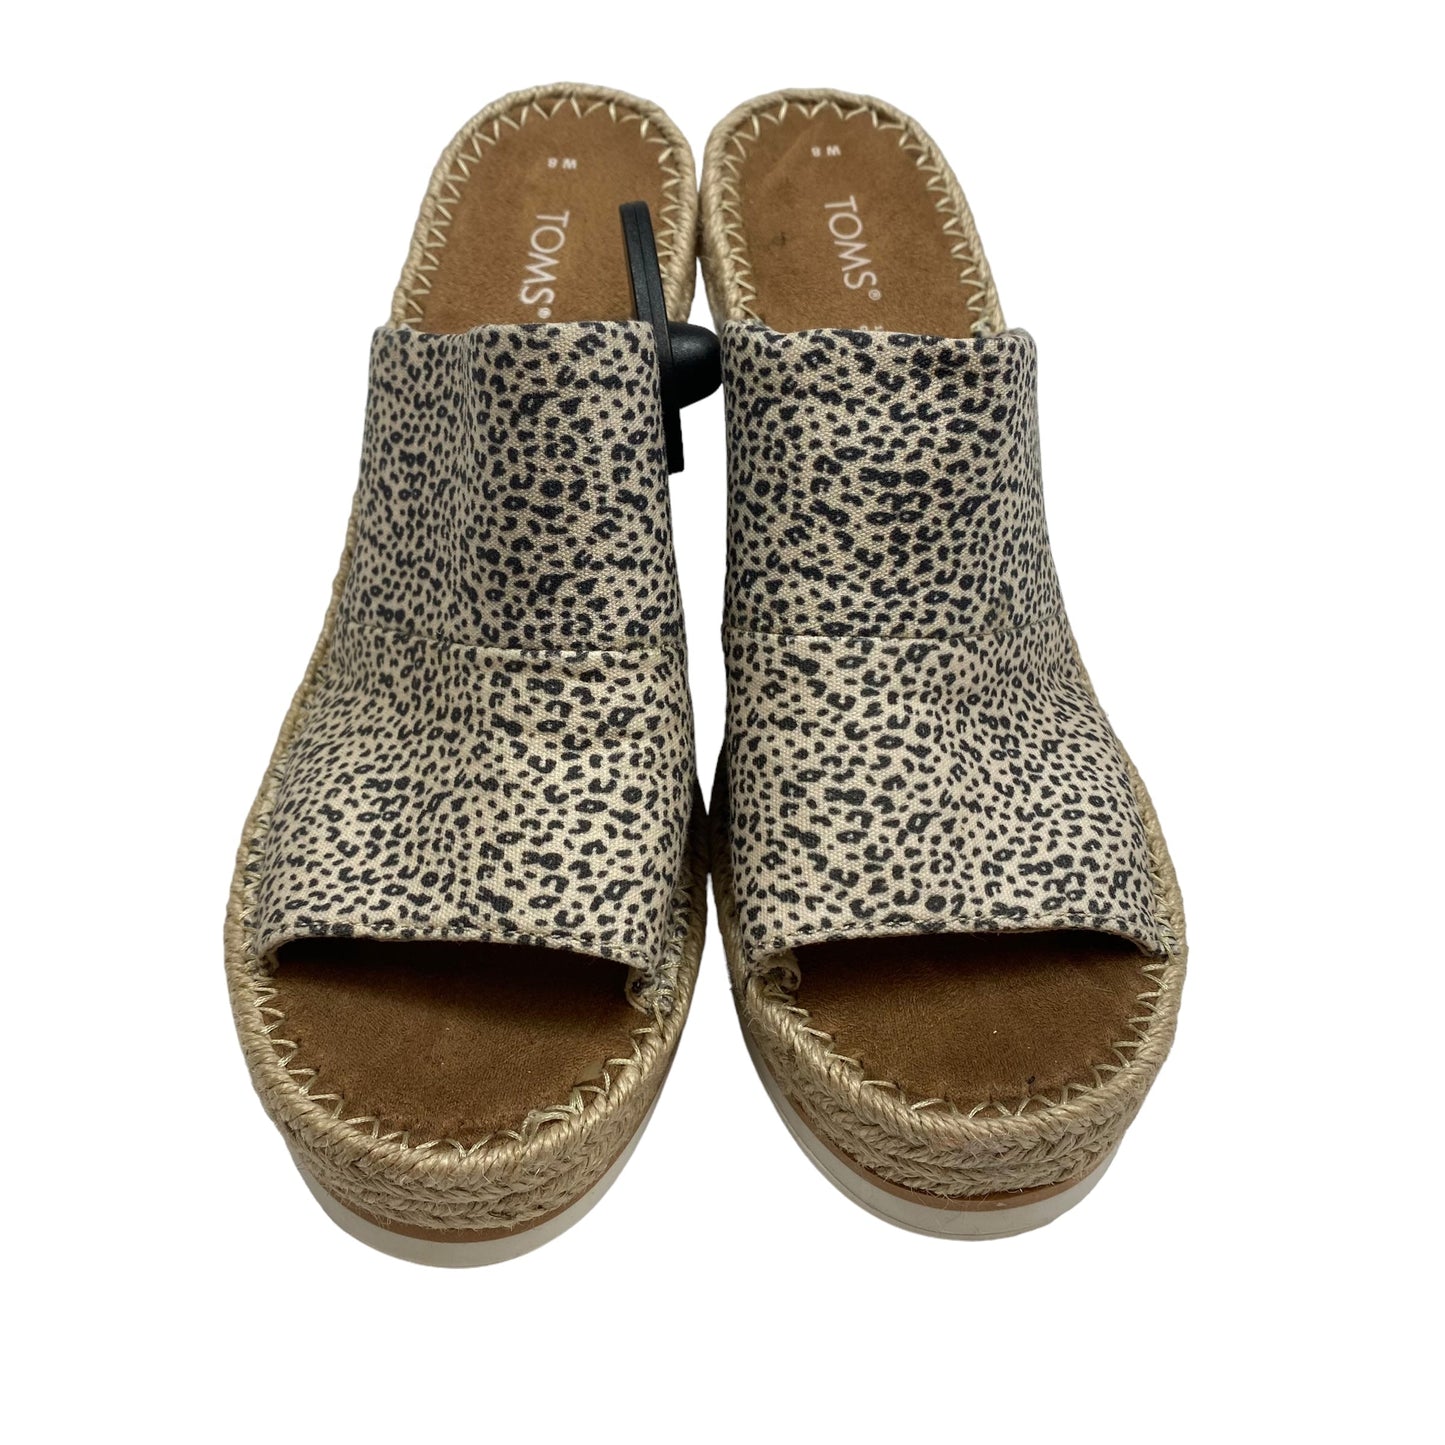 Animal Print Sandals Heels Wedge Toms, Size 8